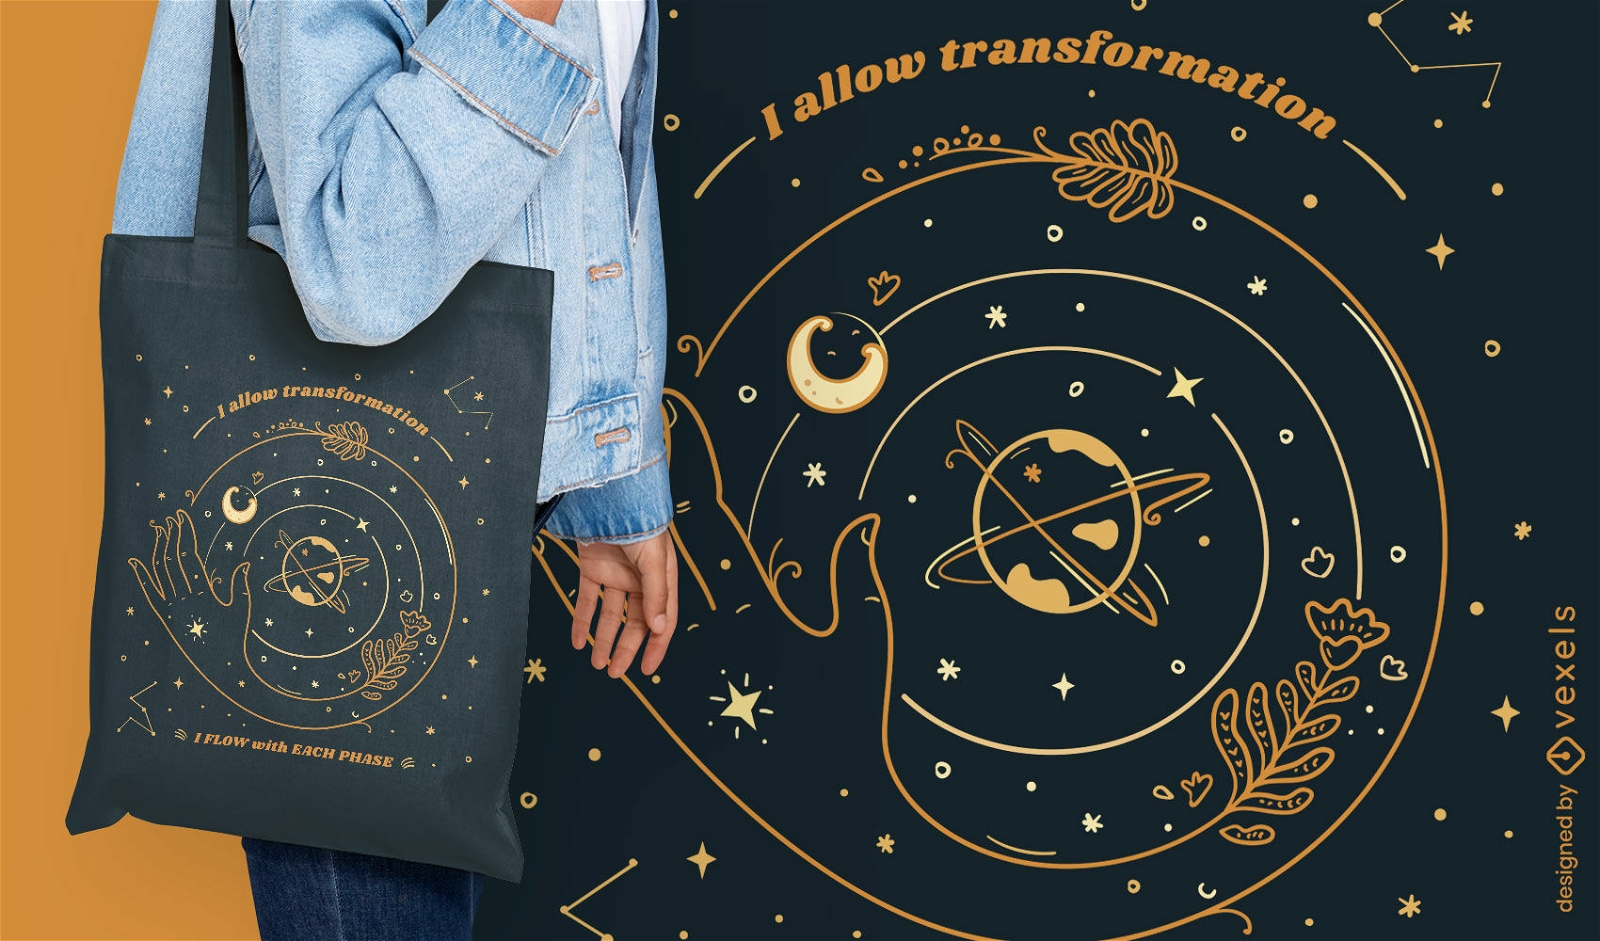 Orbiting planets tote bag design